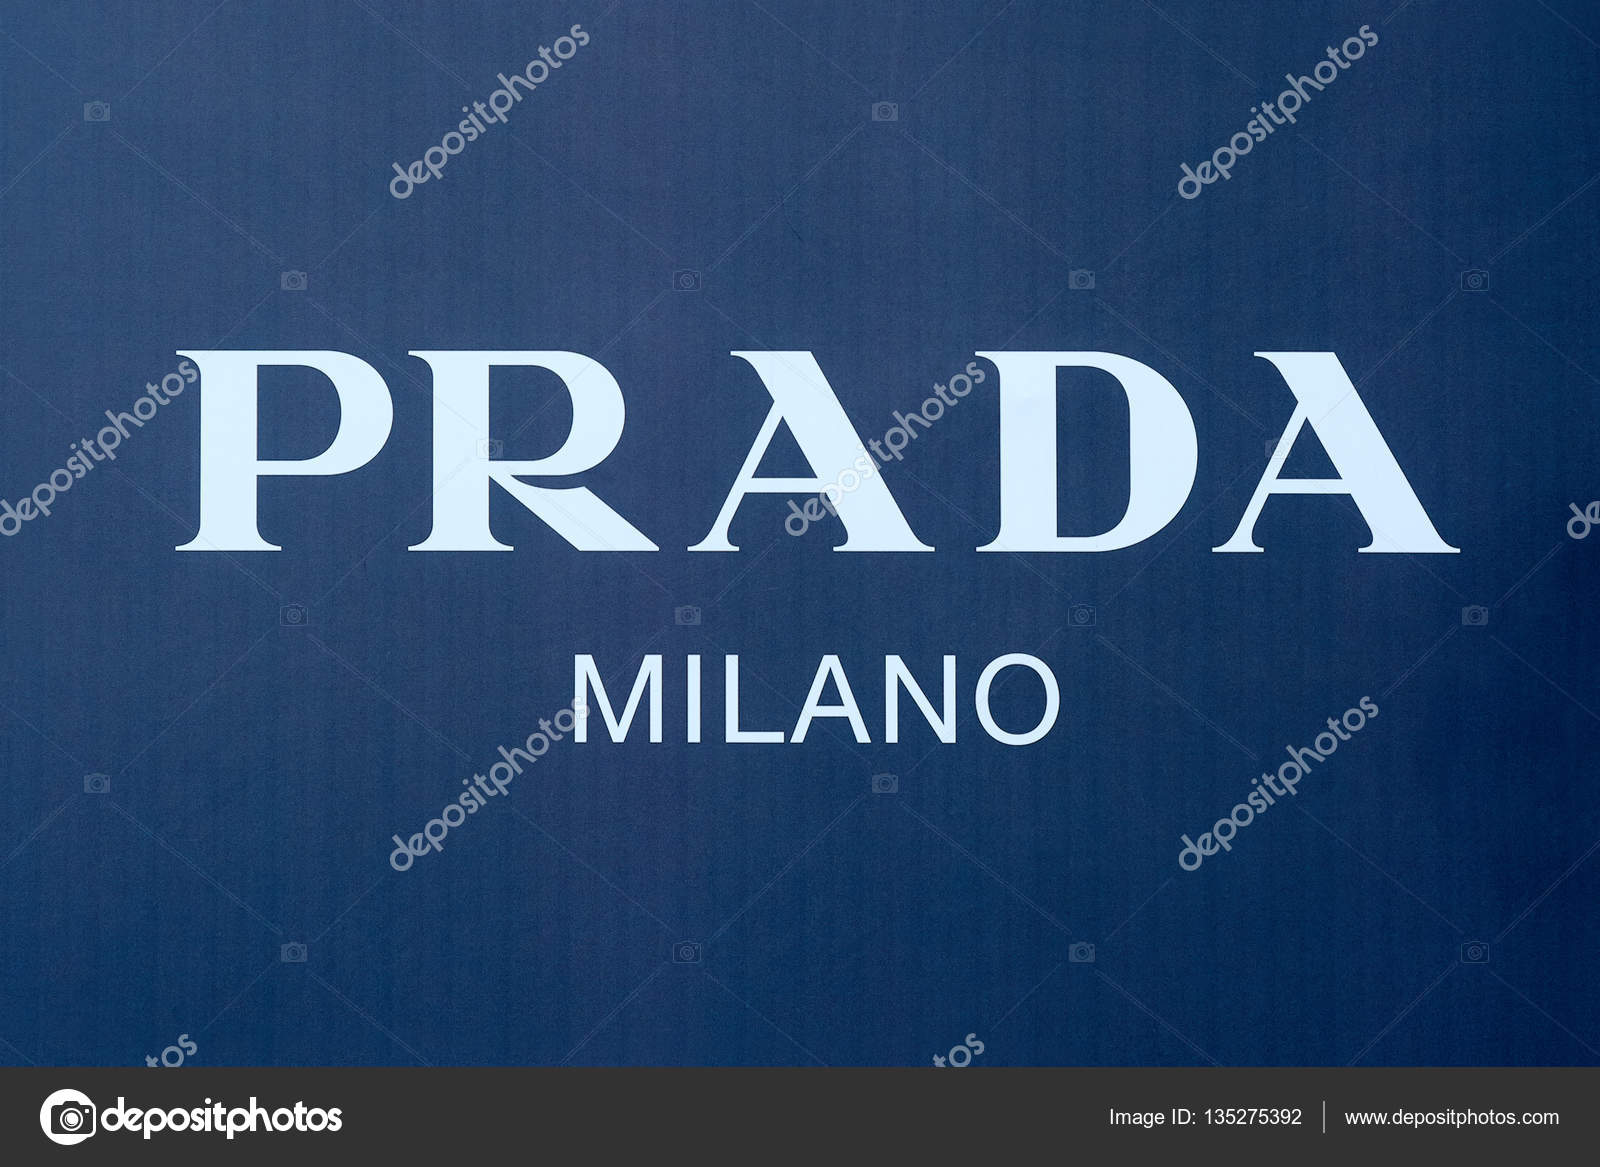 Prada Milano banner – Stock Editorial Photo © canbedone #135275392